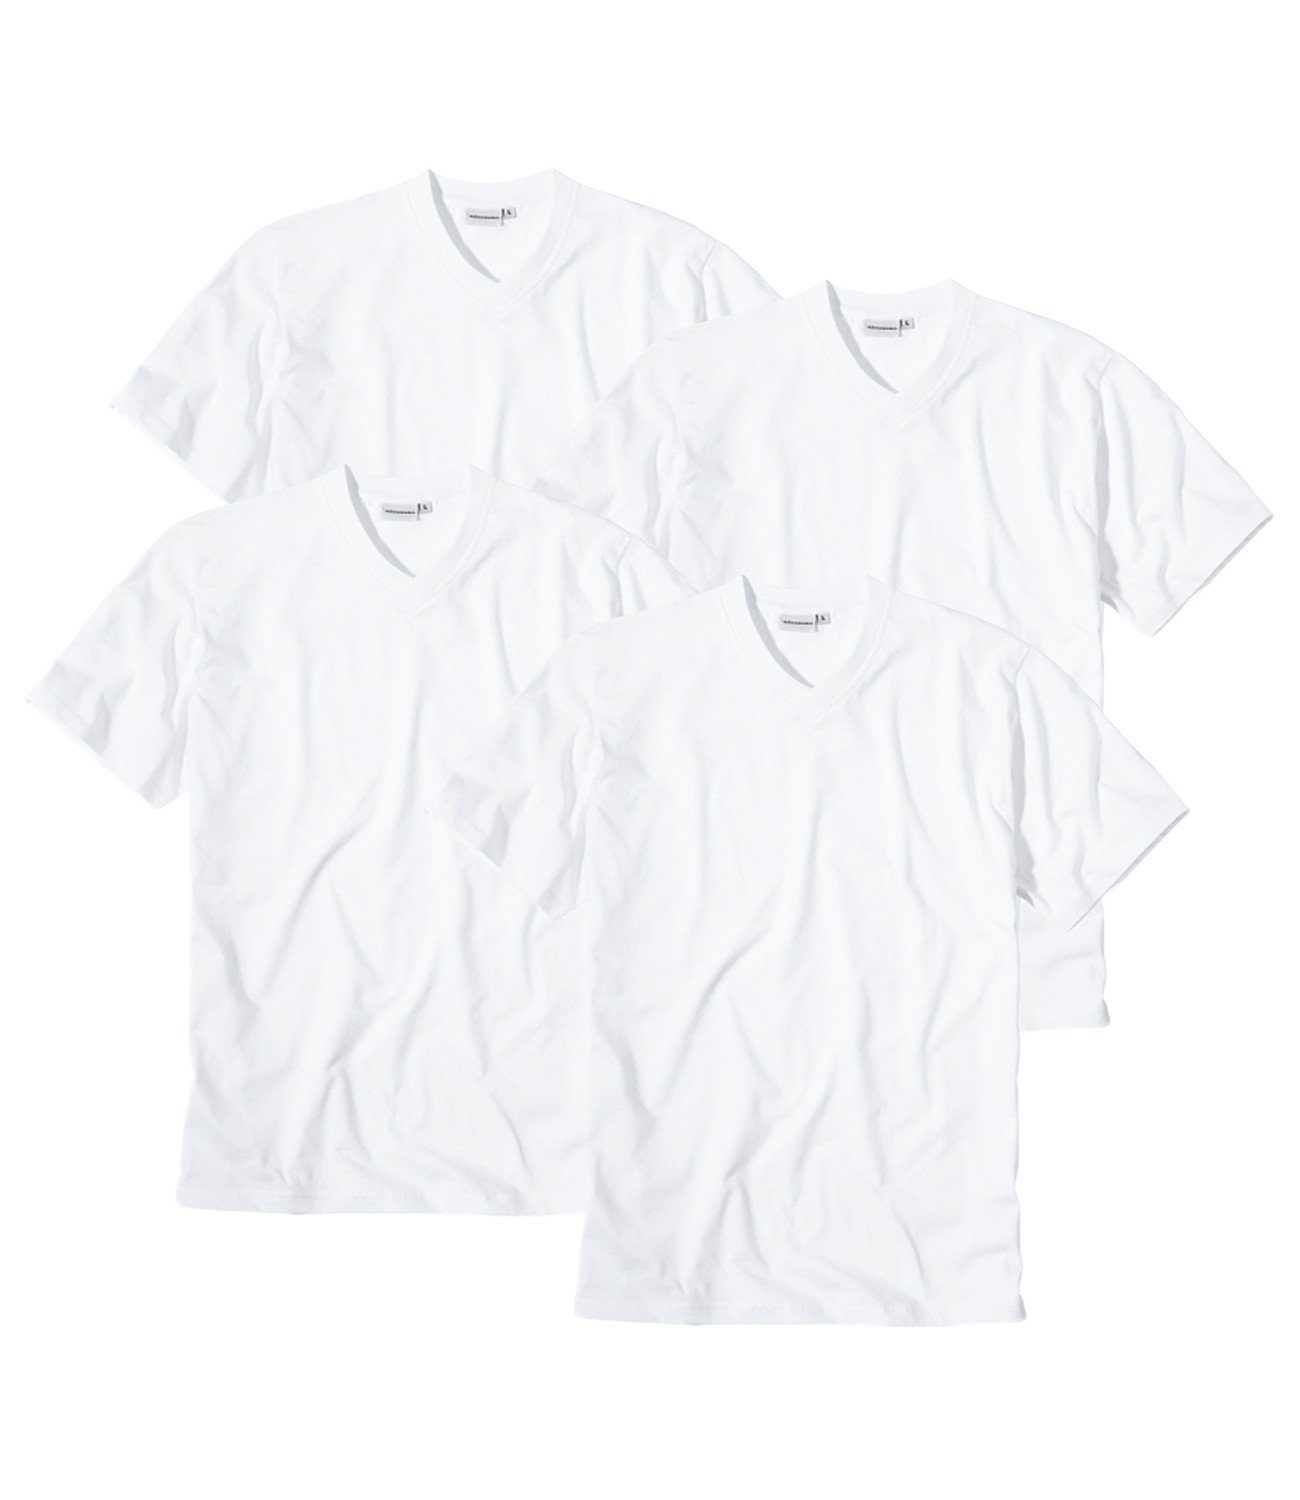 Wäsche/Bademode Unterhemden GÖTZBURG Unterziehshirt V-Neck T-Shirt (4 Stück), ohne Seitennaht